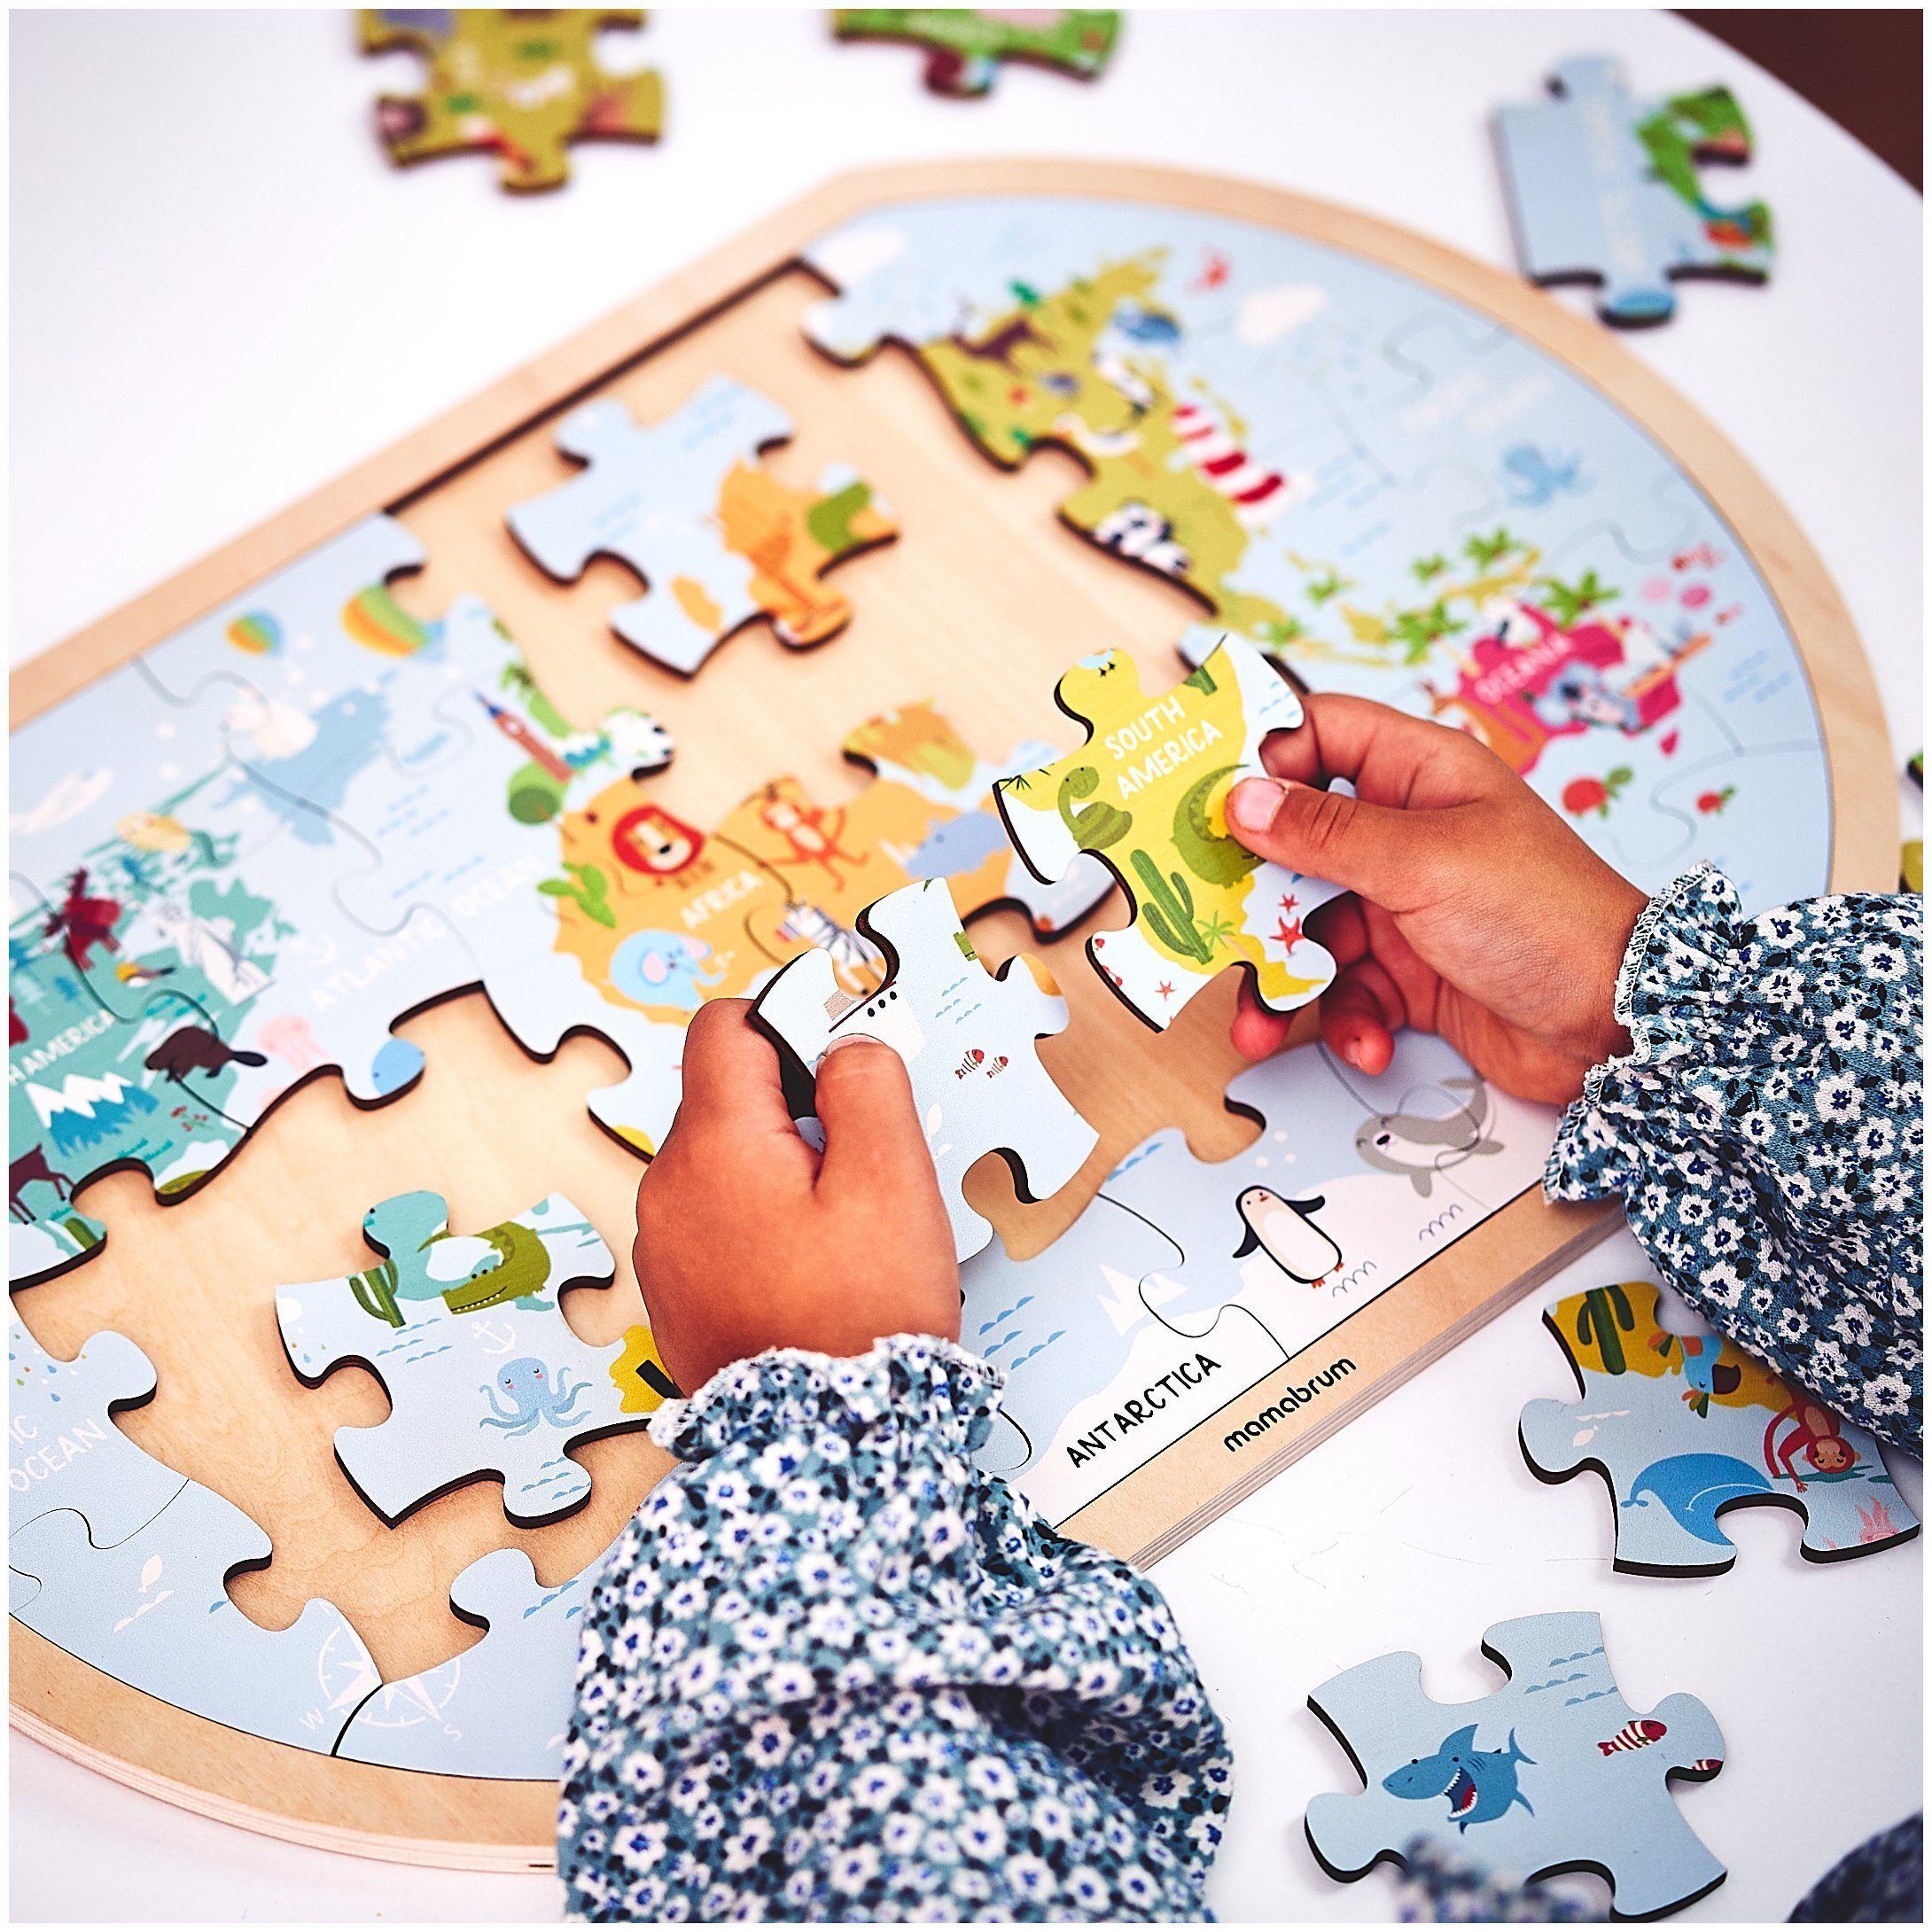 der Puzzle-Sortierschale Mamabrum Holzpuzzle Welt - Karte